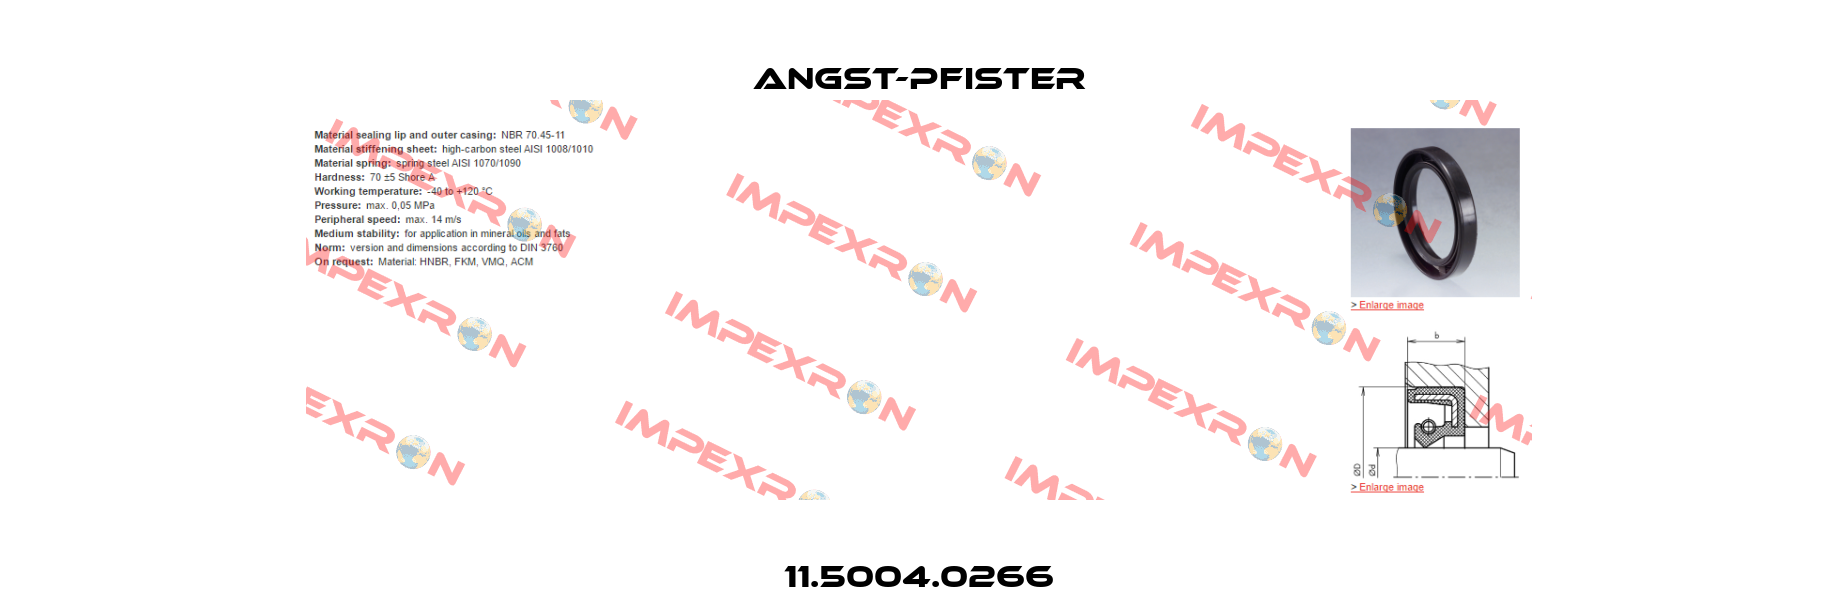 11.5004.0266 Angst-Pfister